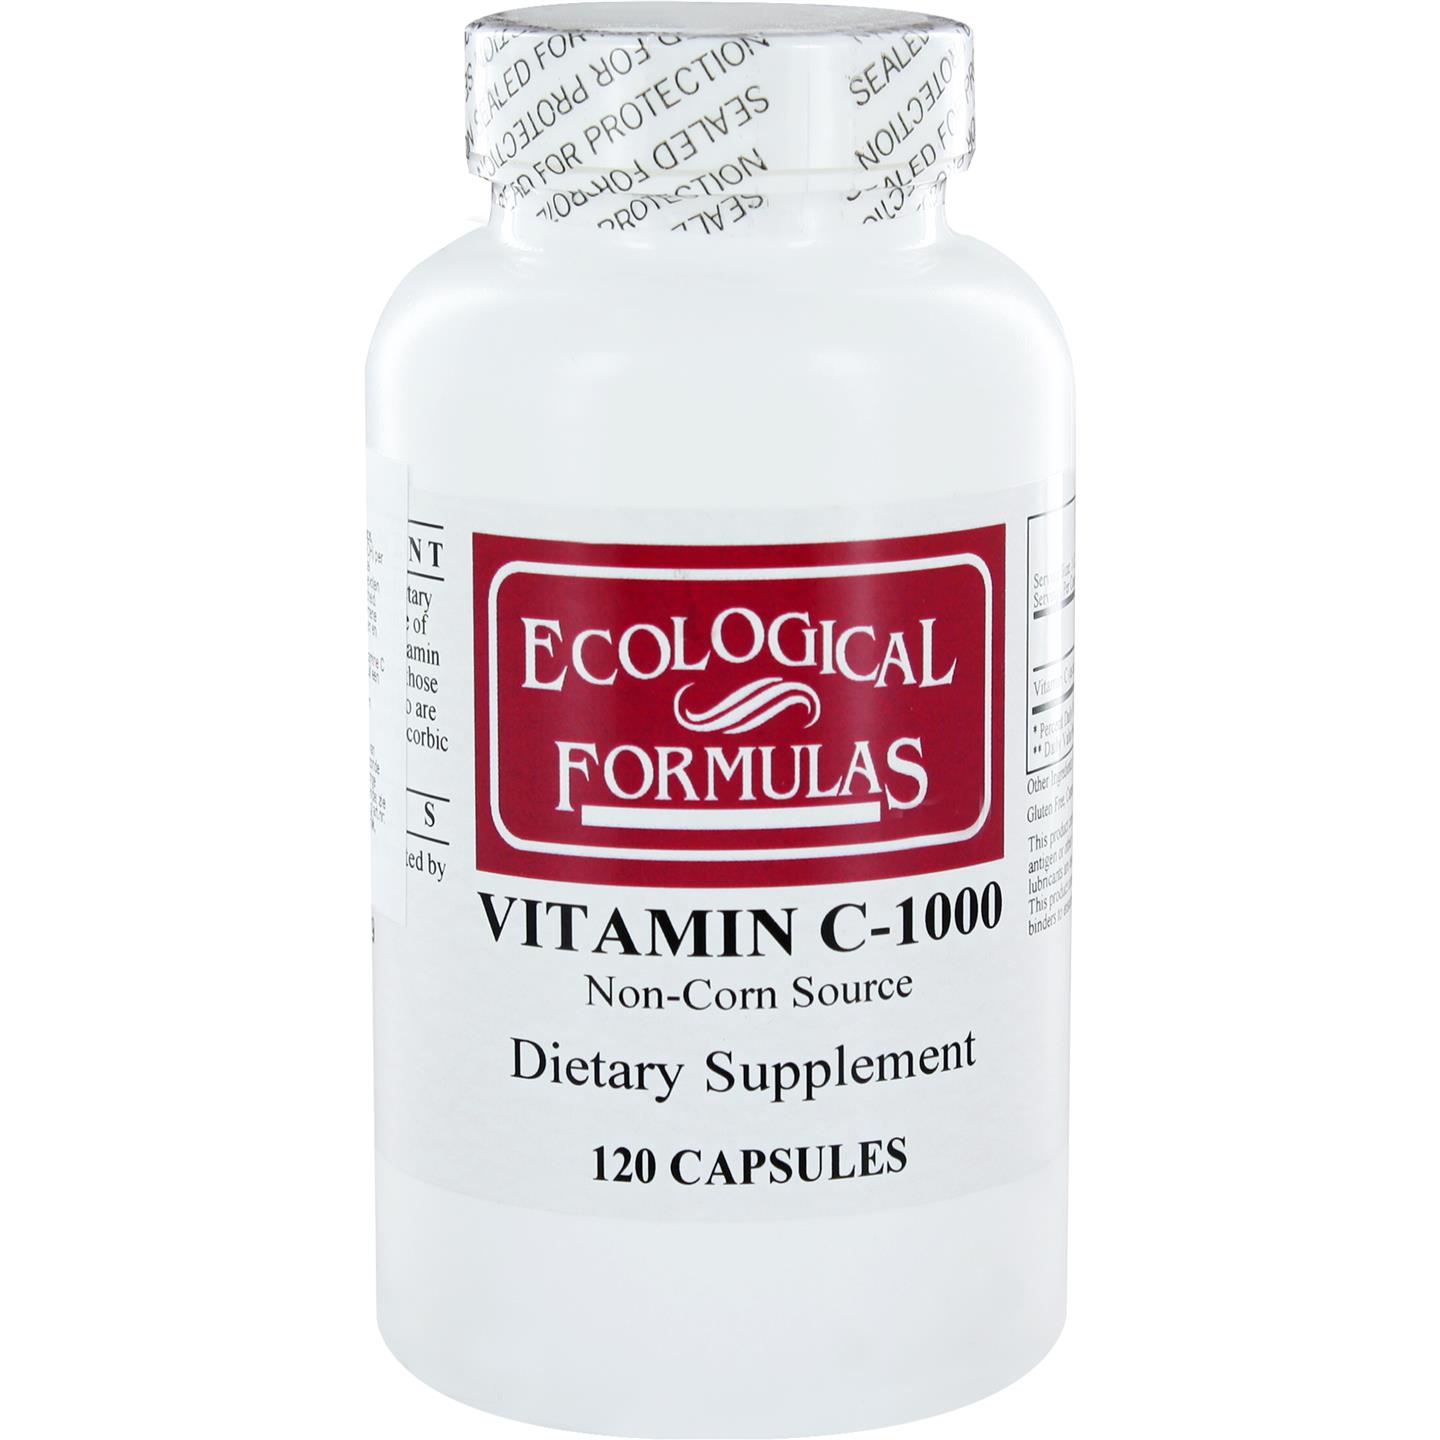 Vitamine C 1000 (uit niet-maïs bron)